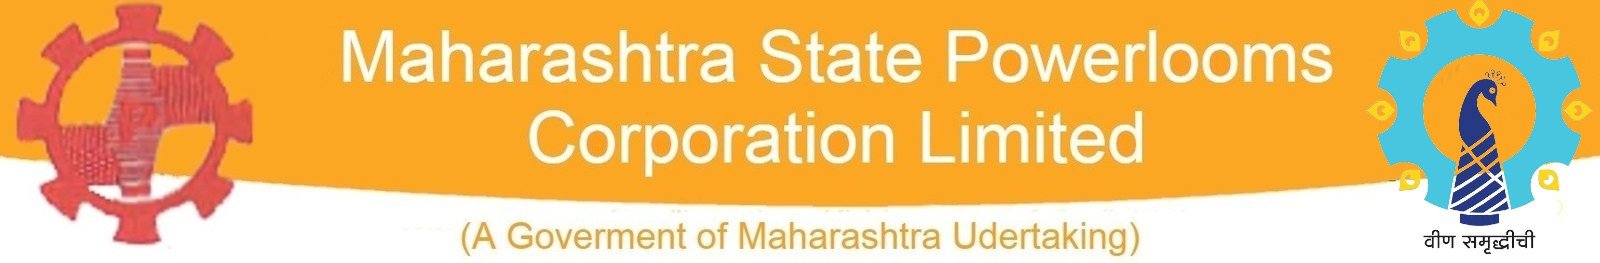 Maharashtra State Powerlooms Corporation Limited